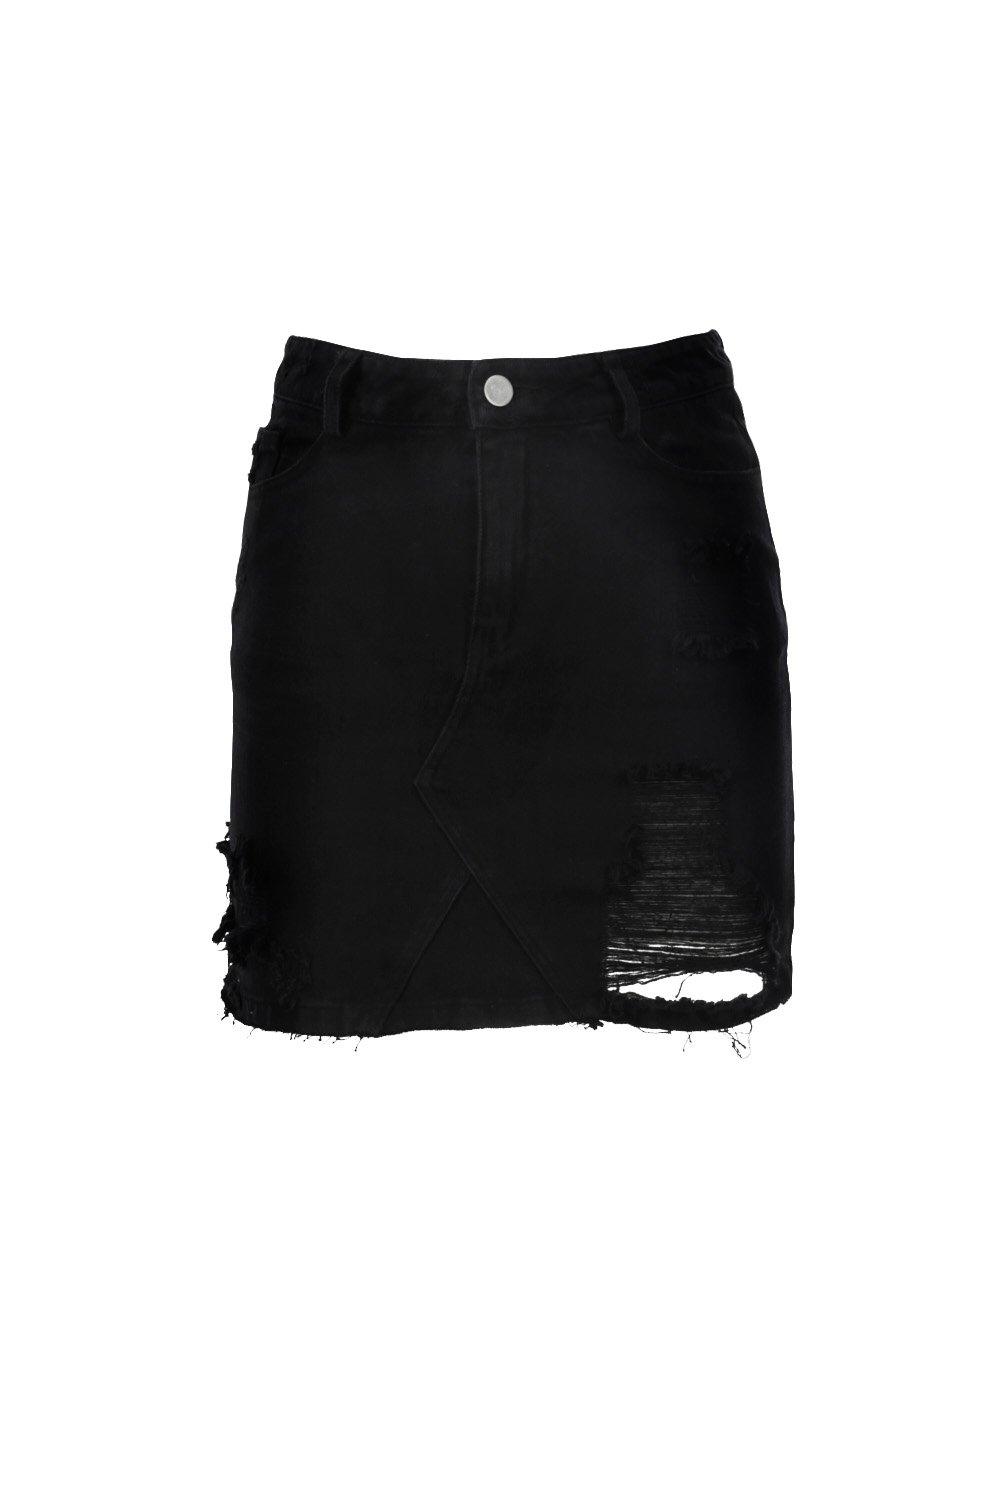 black distressed skirt